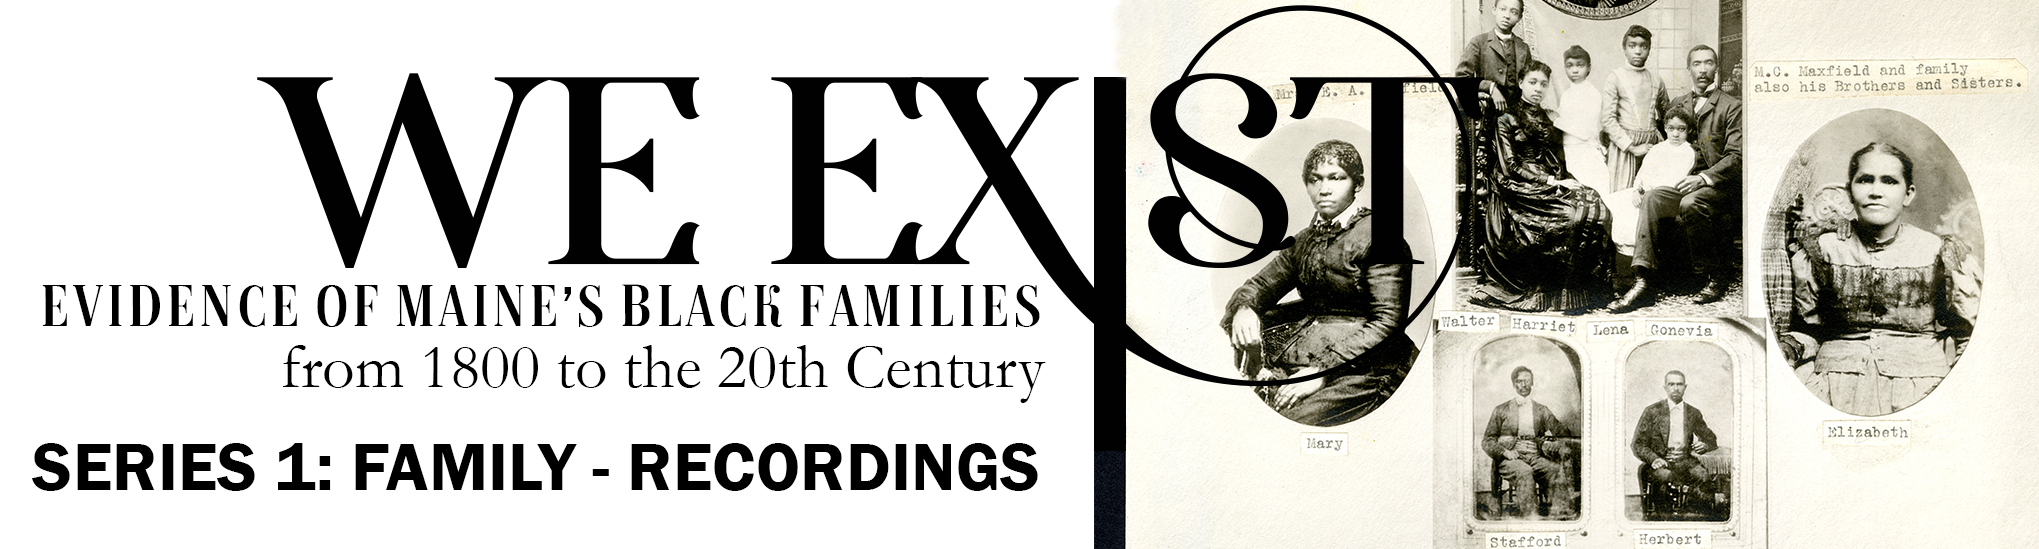 Series 1: Family - Recordings